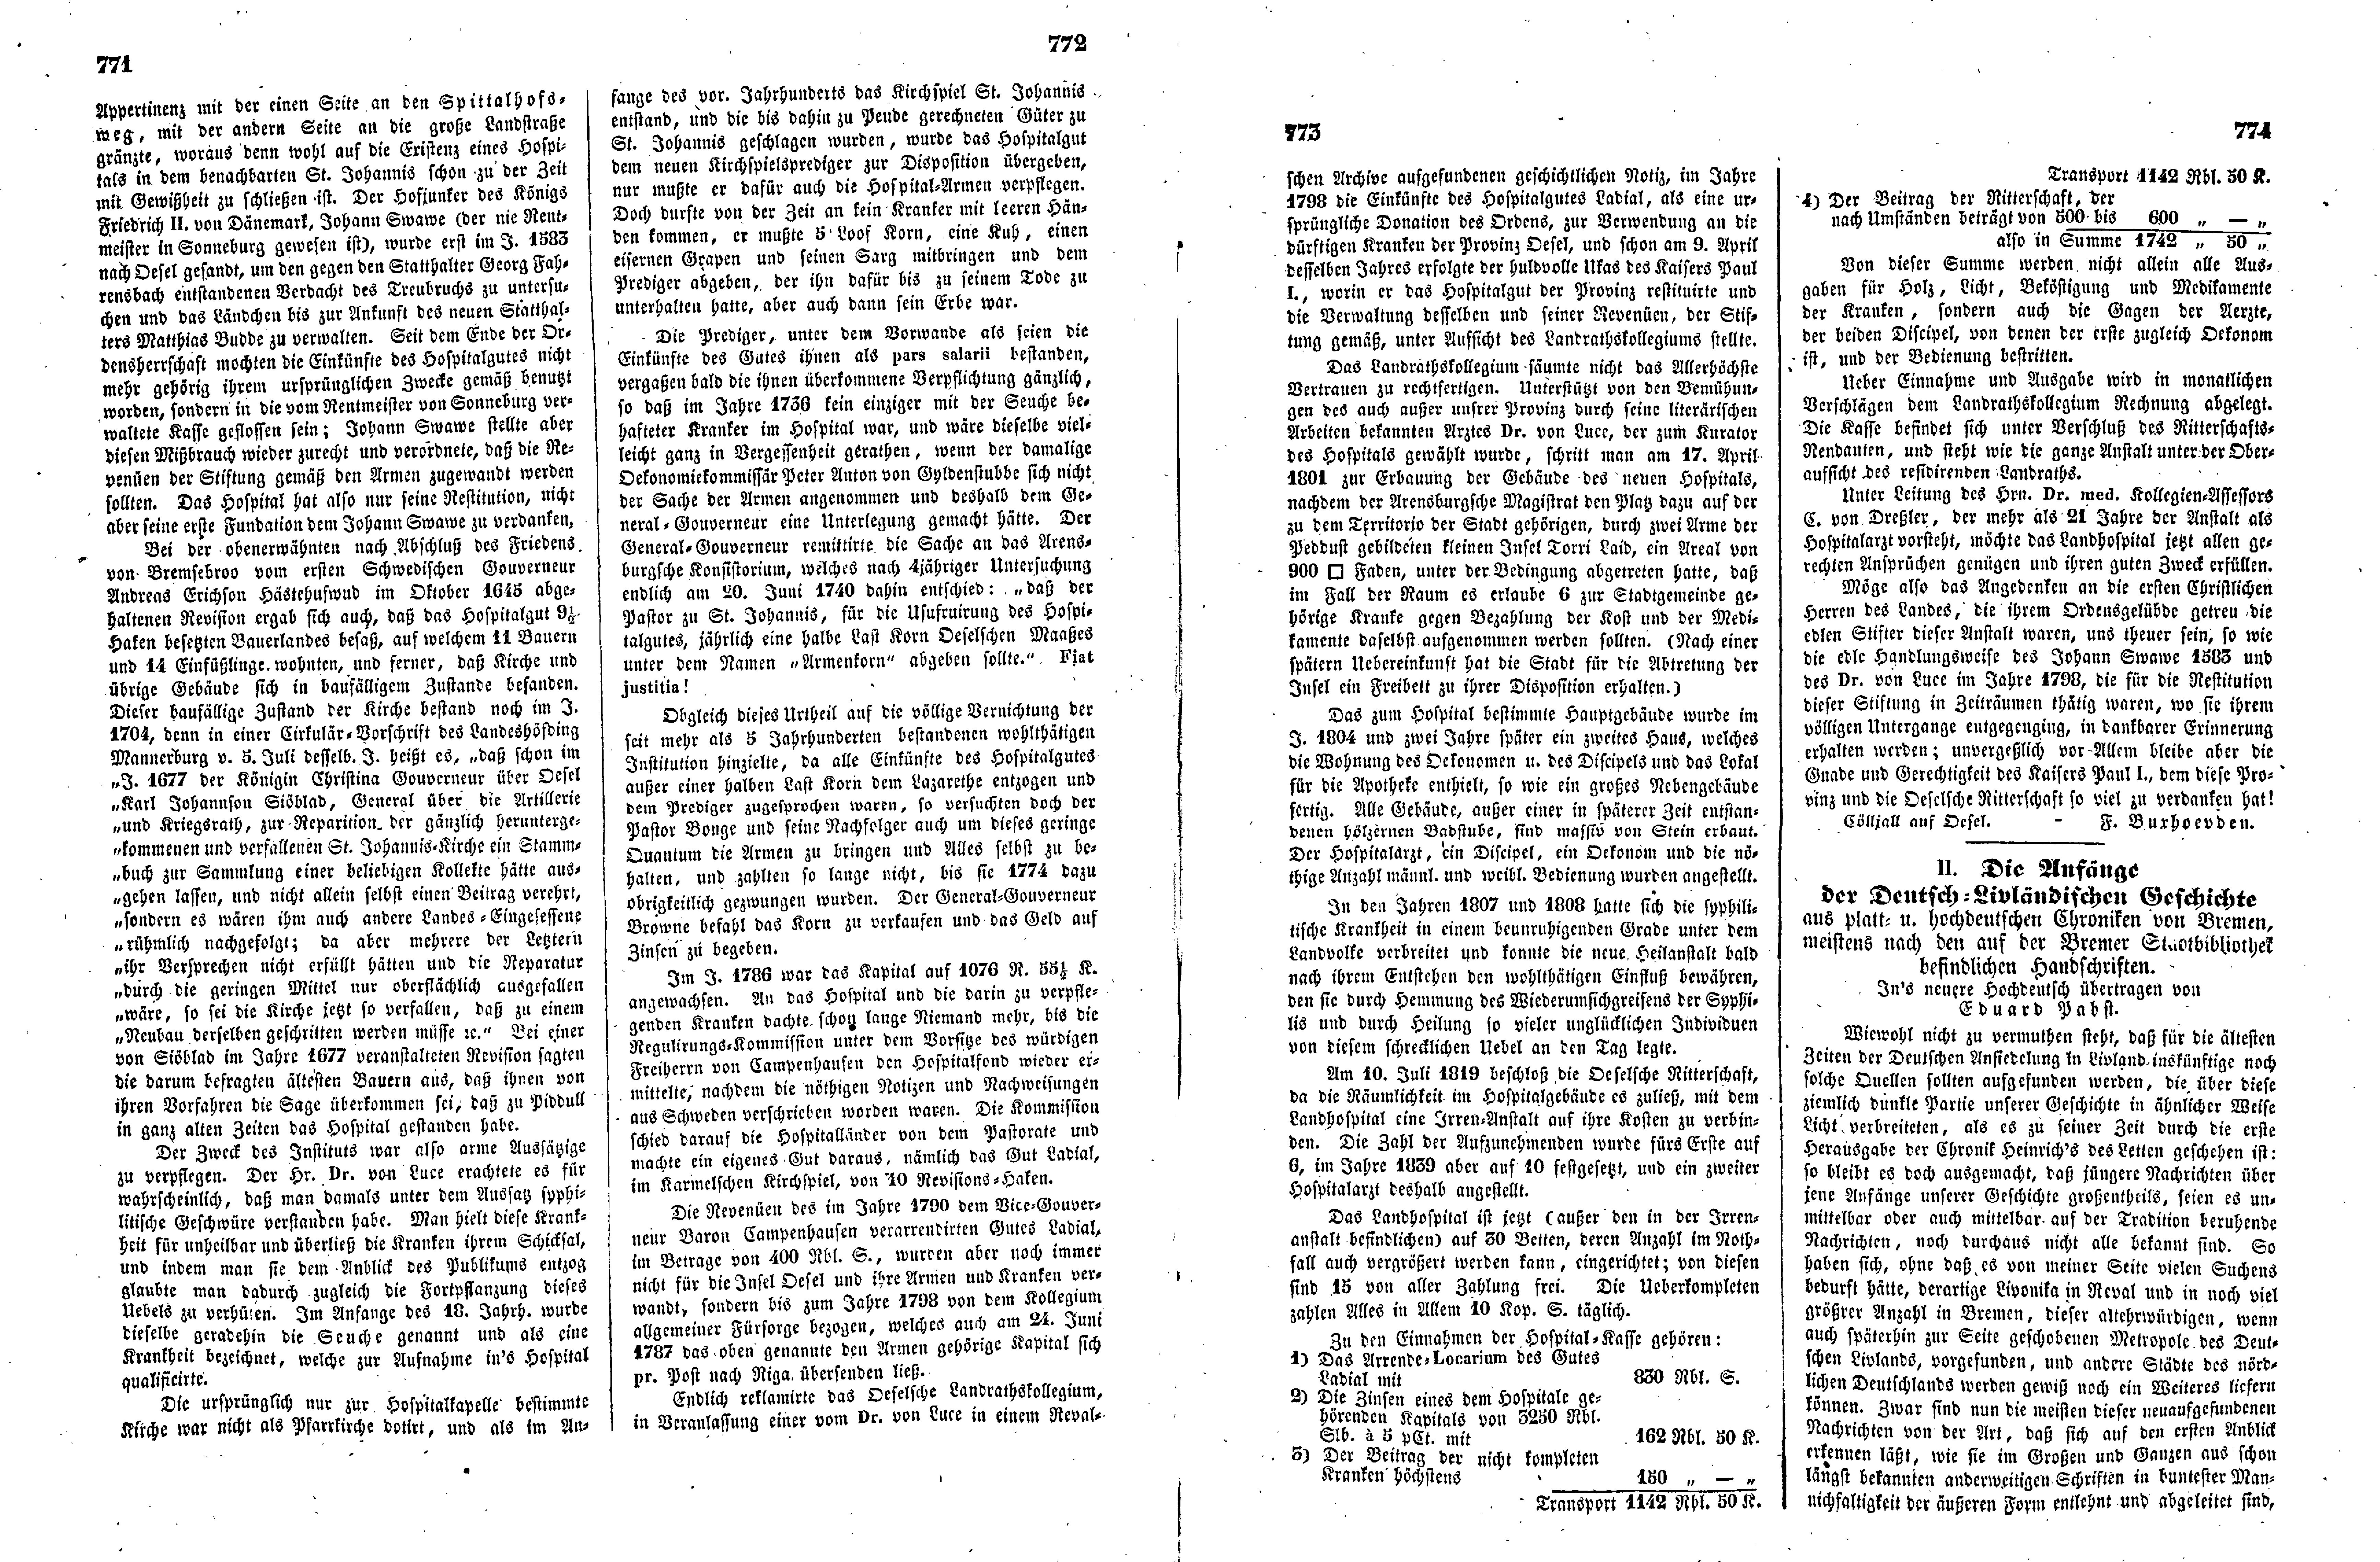 Das Inland [14] (1849) | 198. (771-774) Main body of text